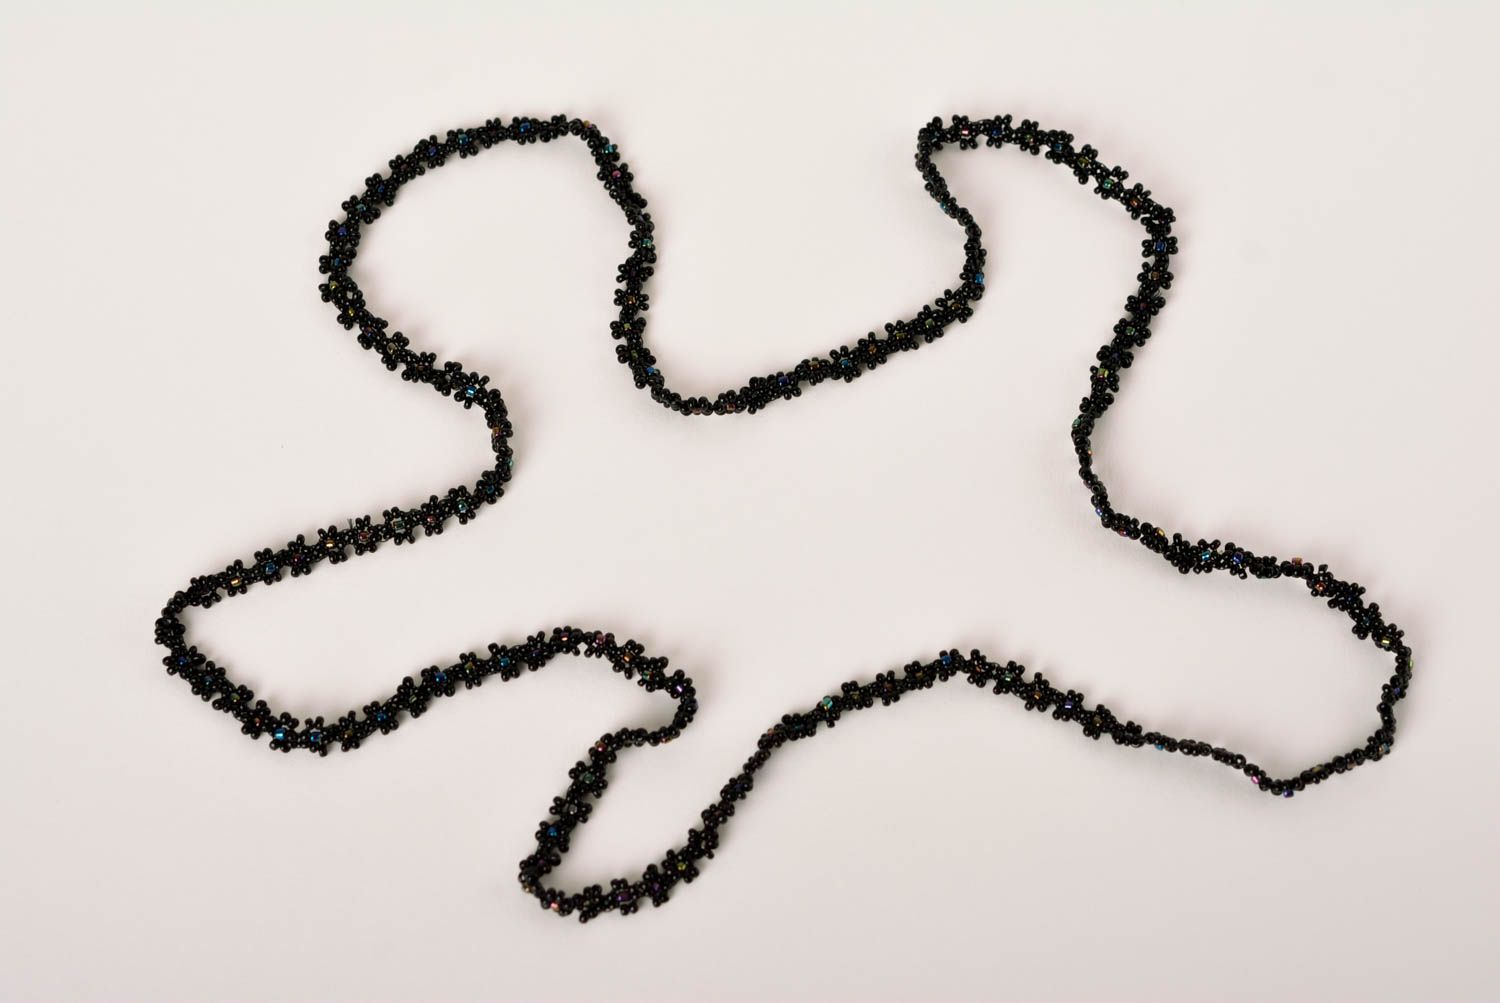 Stylish handmade beaded necklace fashion accessories artisan jewelry designs photo 5